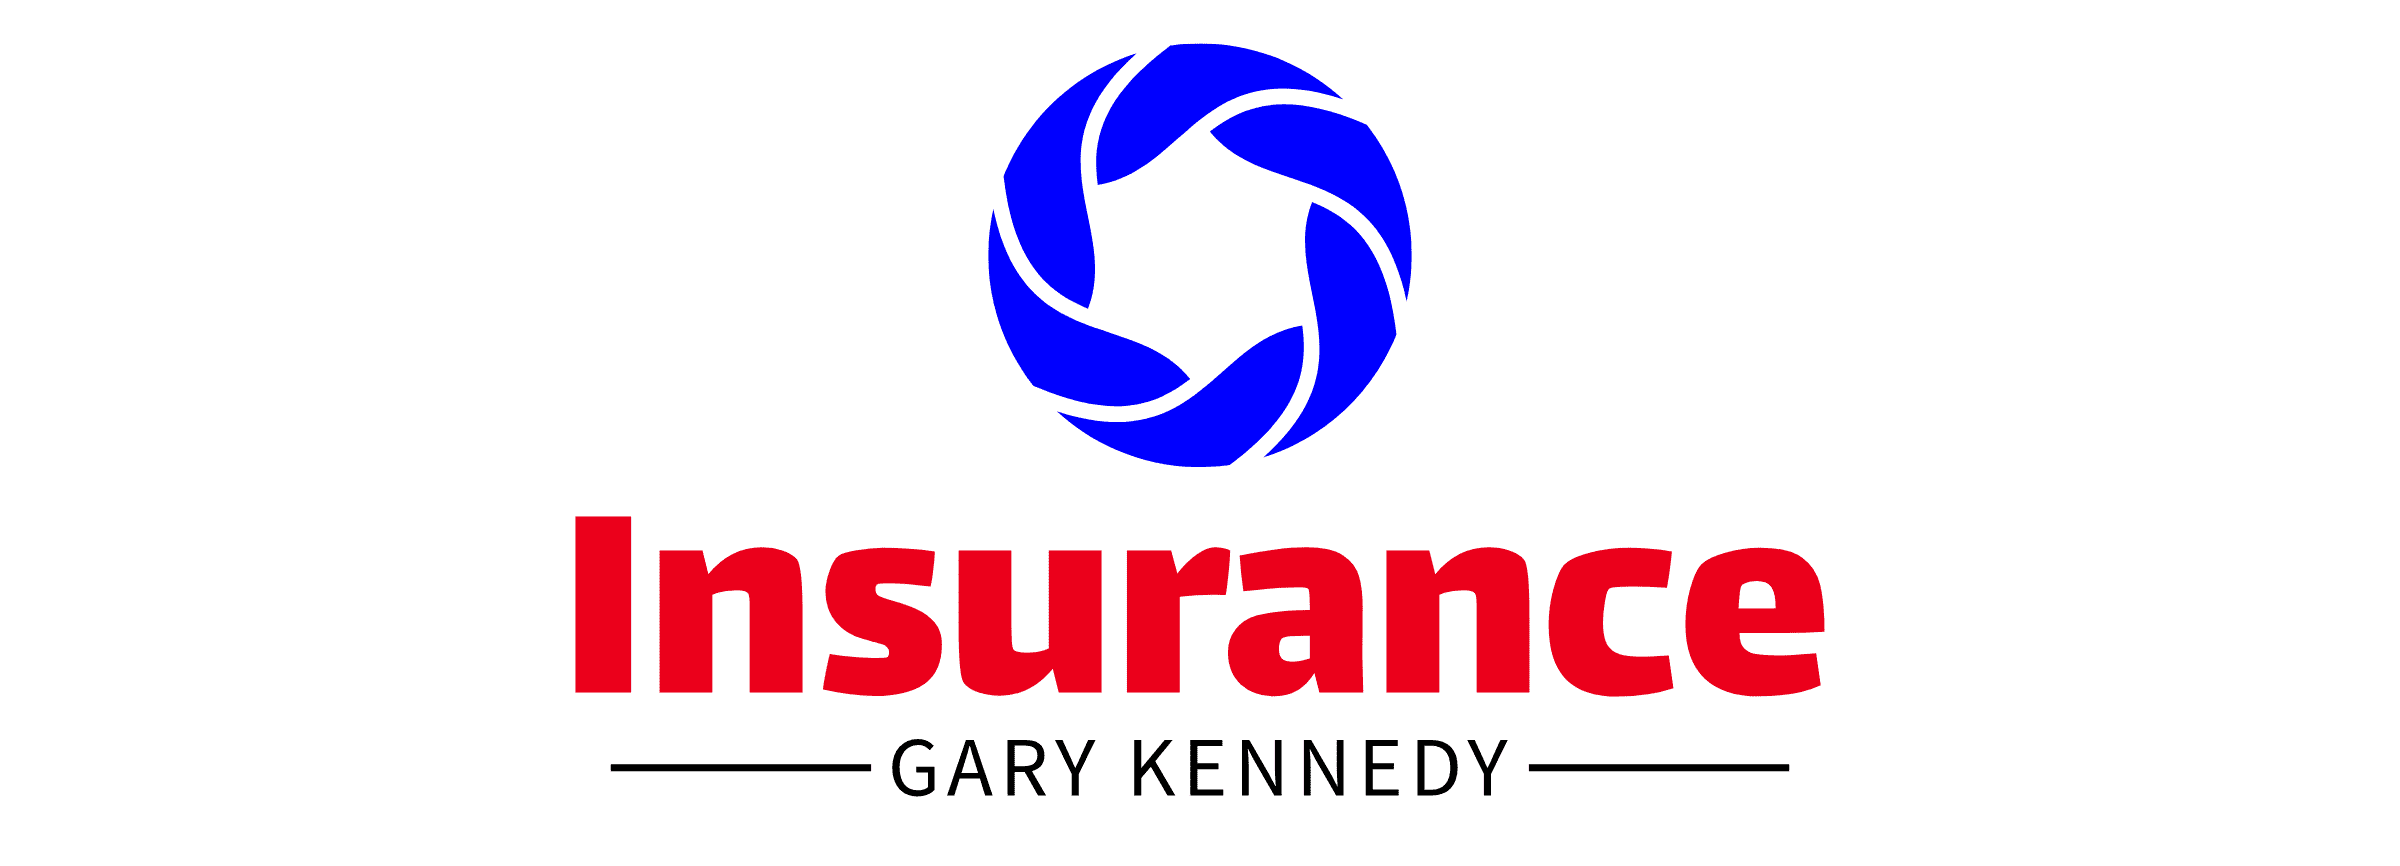 Gary Kennedy Insurance